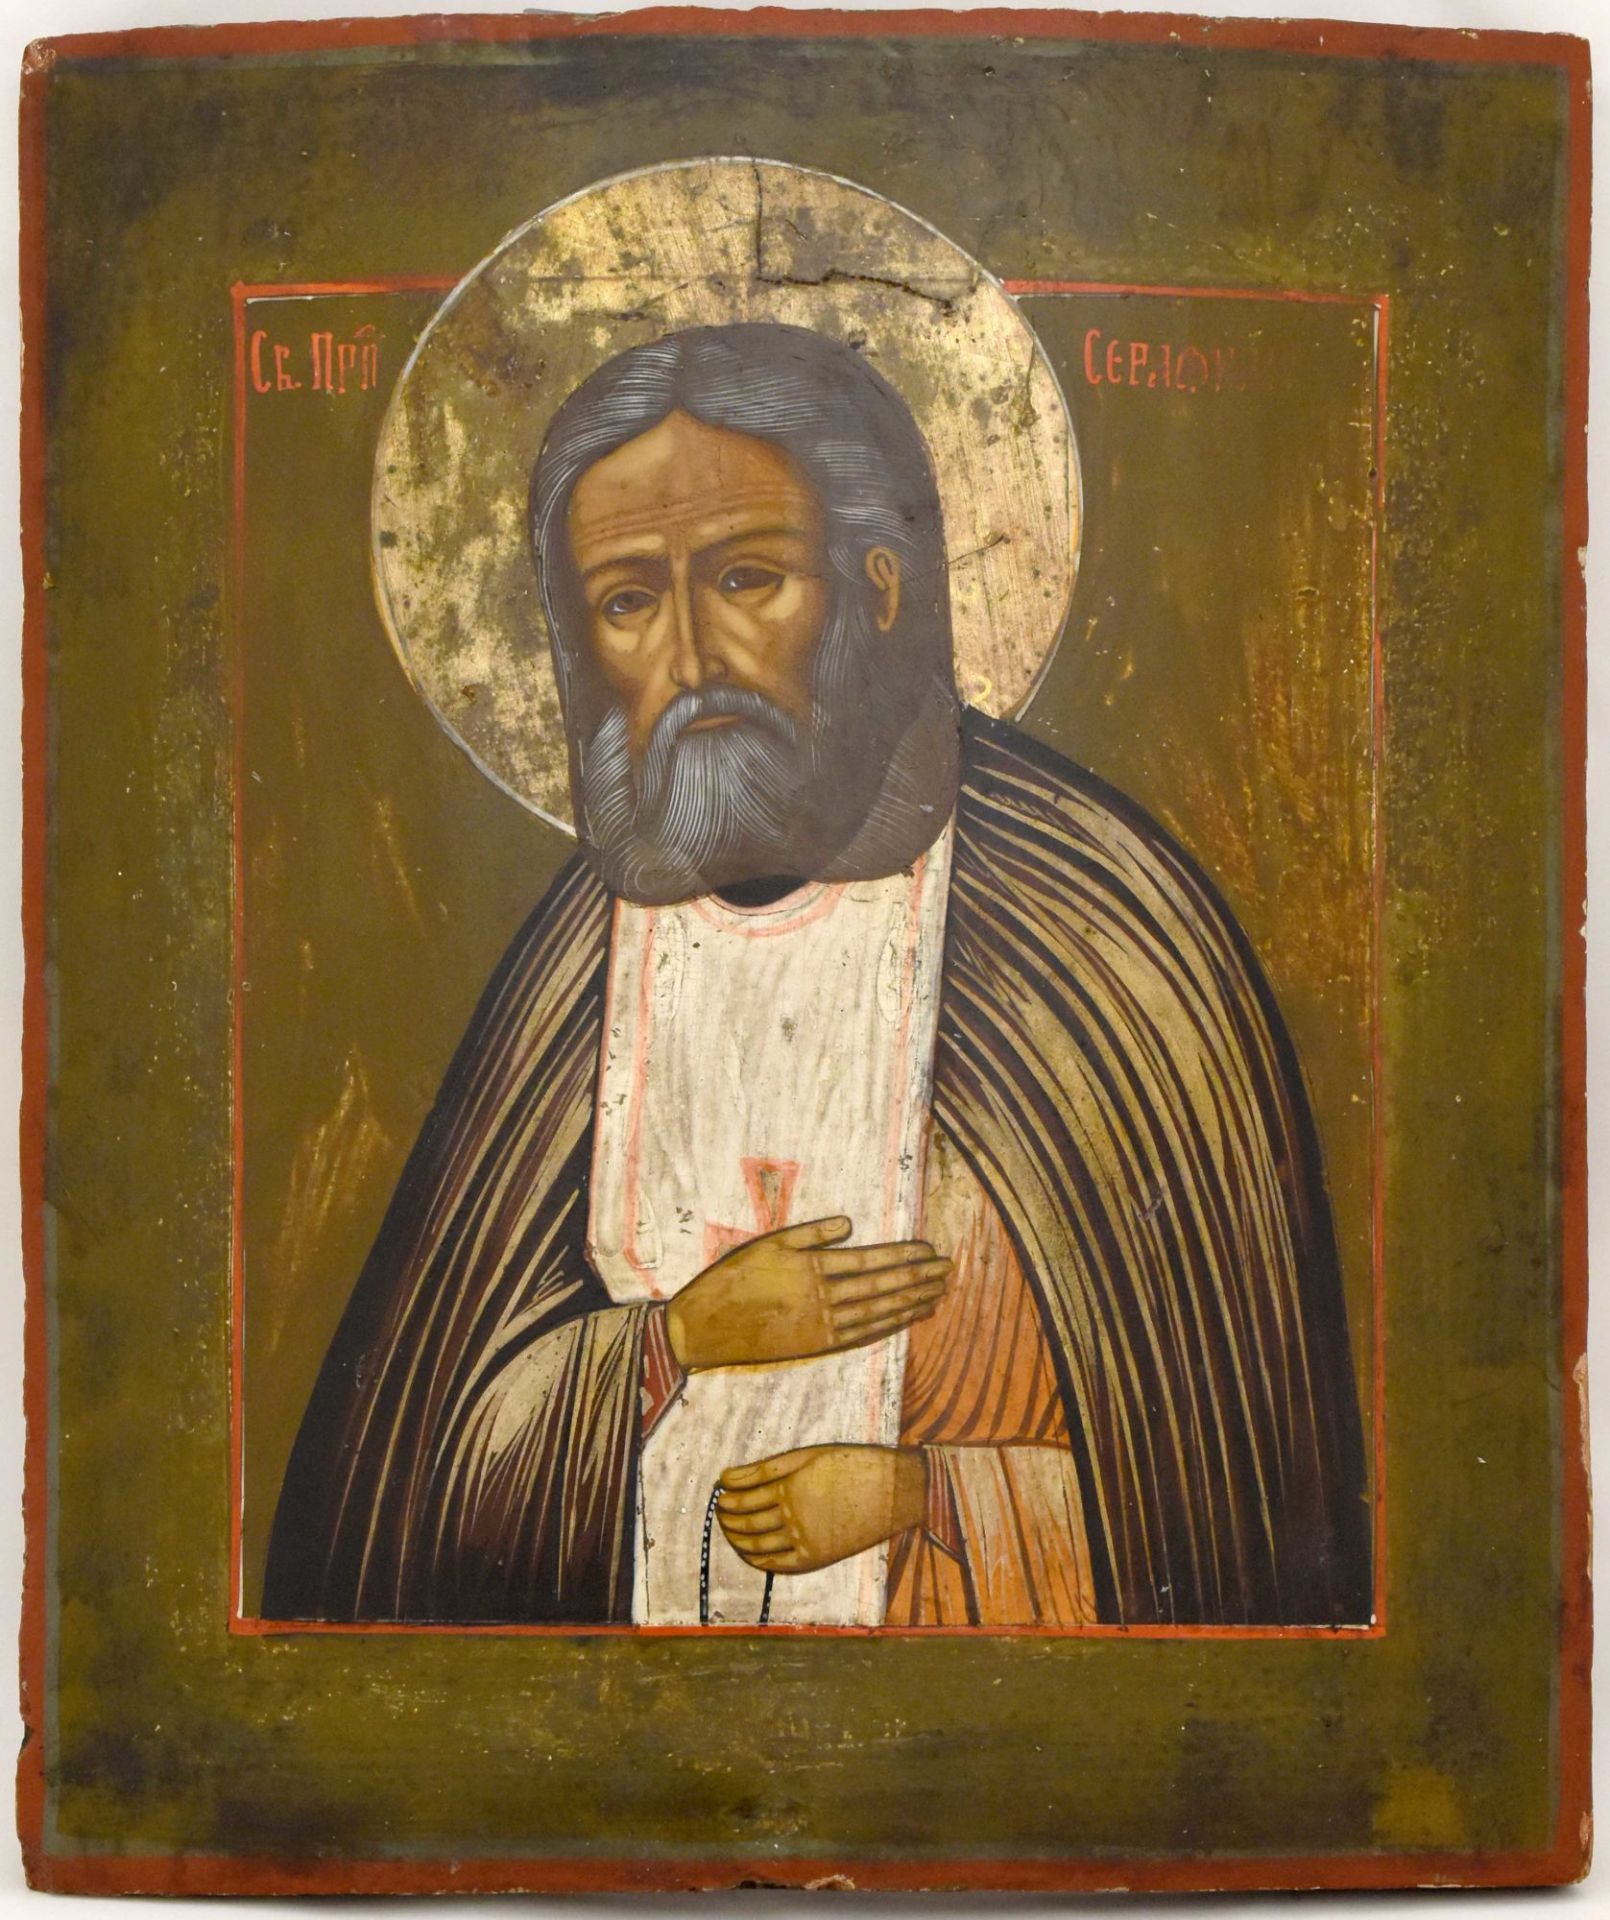 Russian icon "Saint Serafim of Sarov". - Russia, 20th cent. - 31x26 cm.